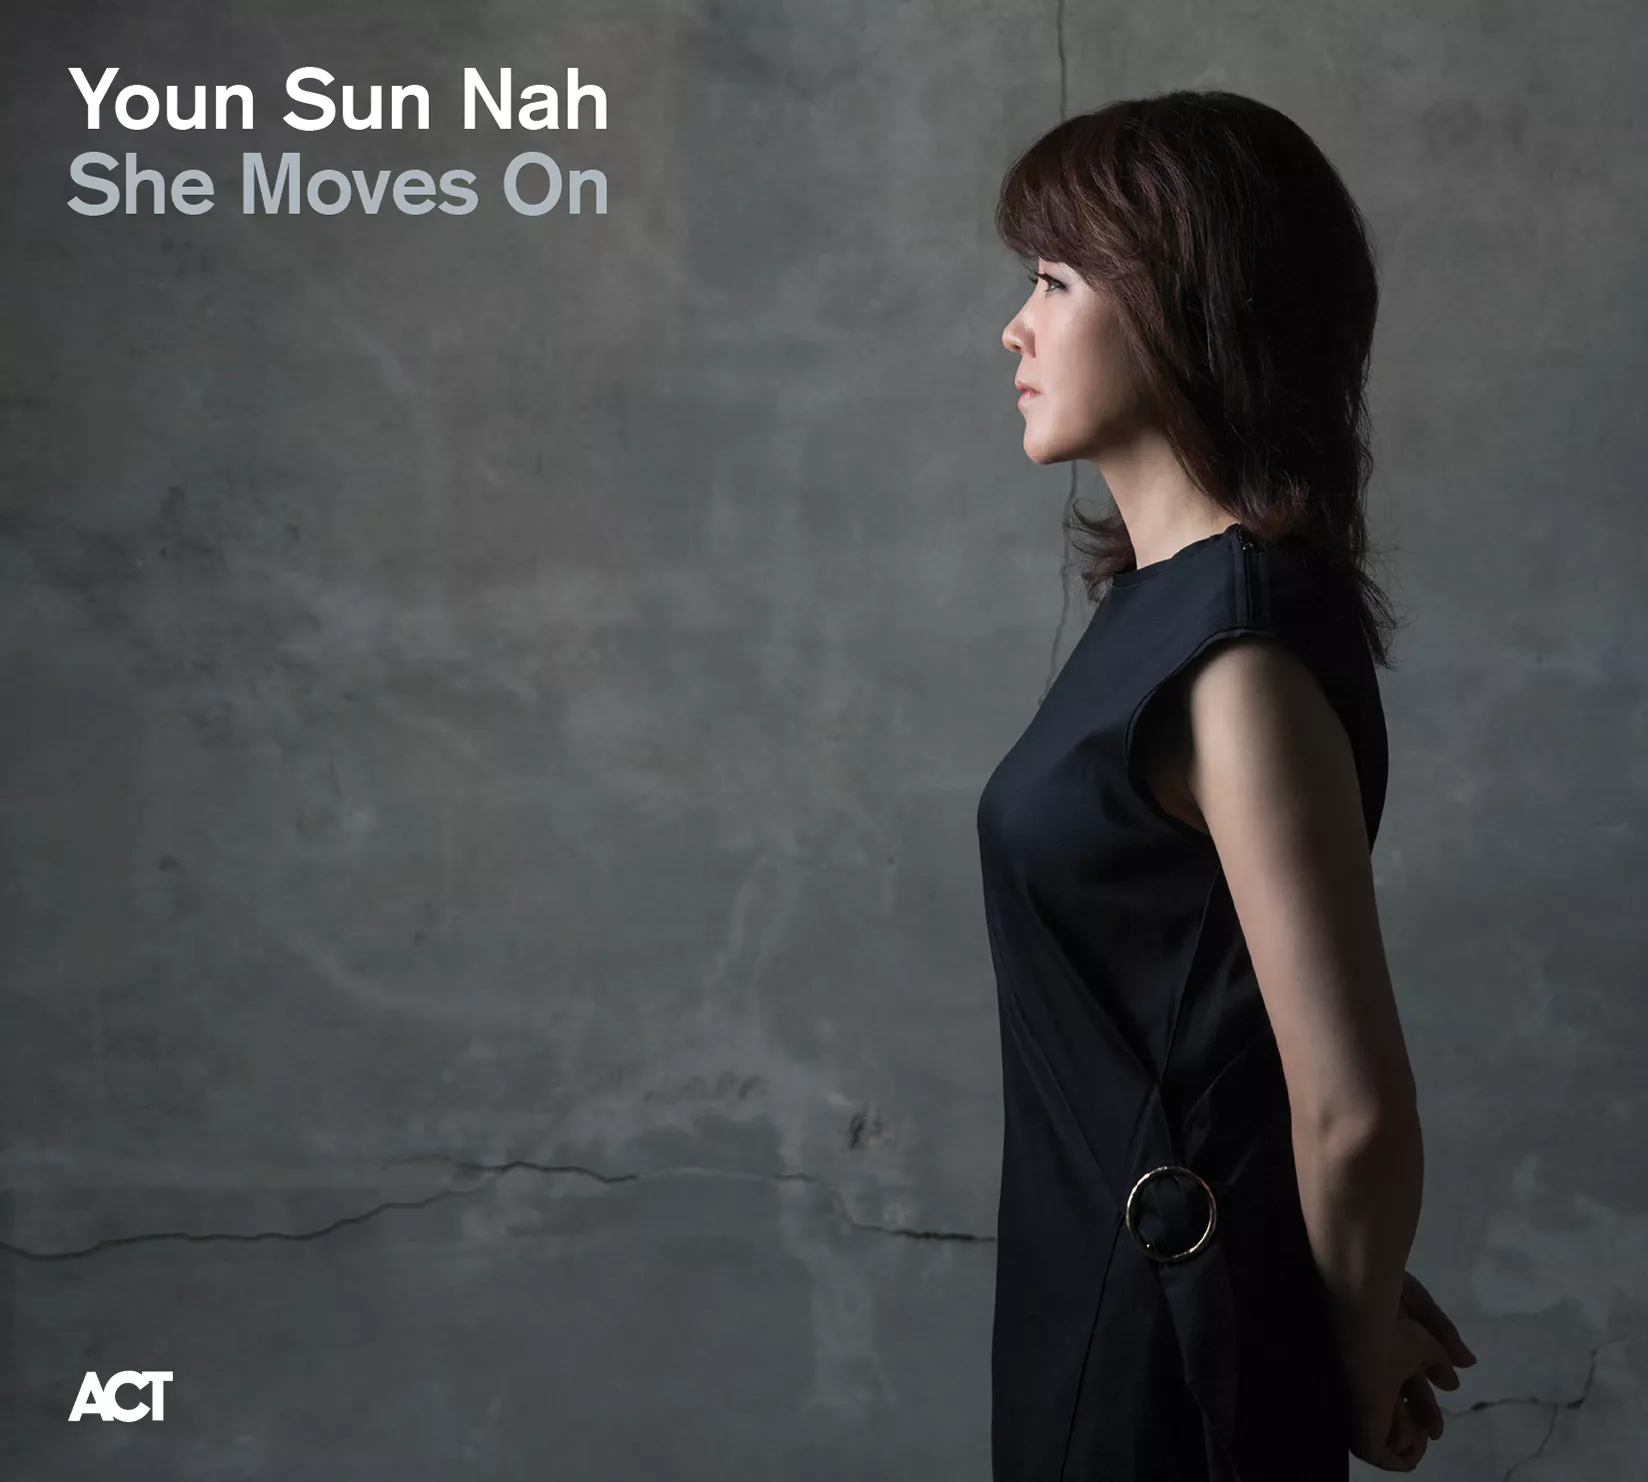 She Moves On - Youn Sun Nah